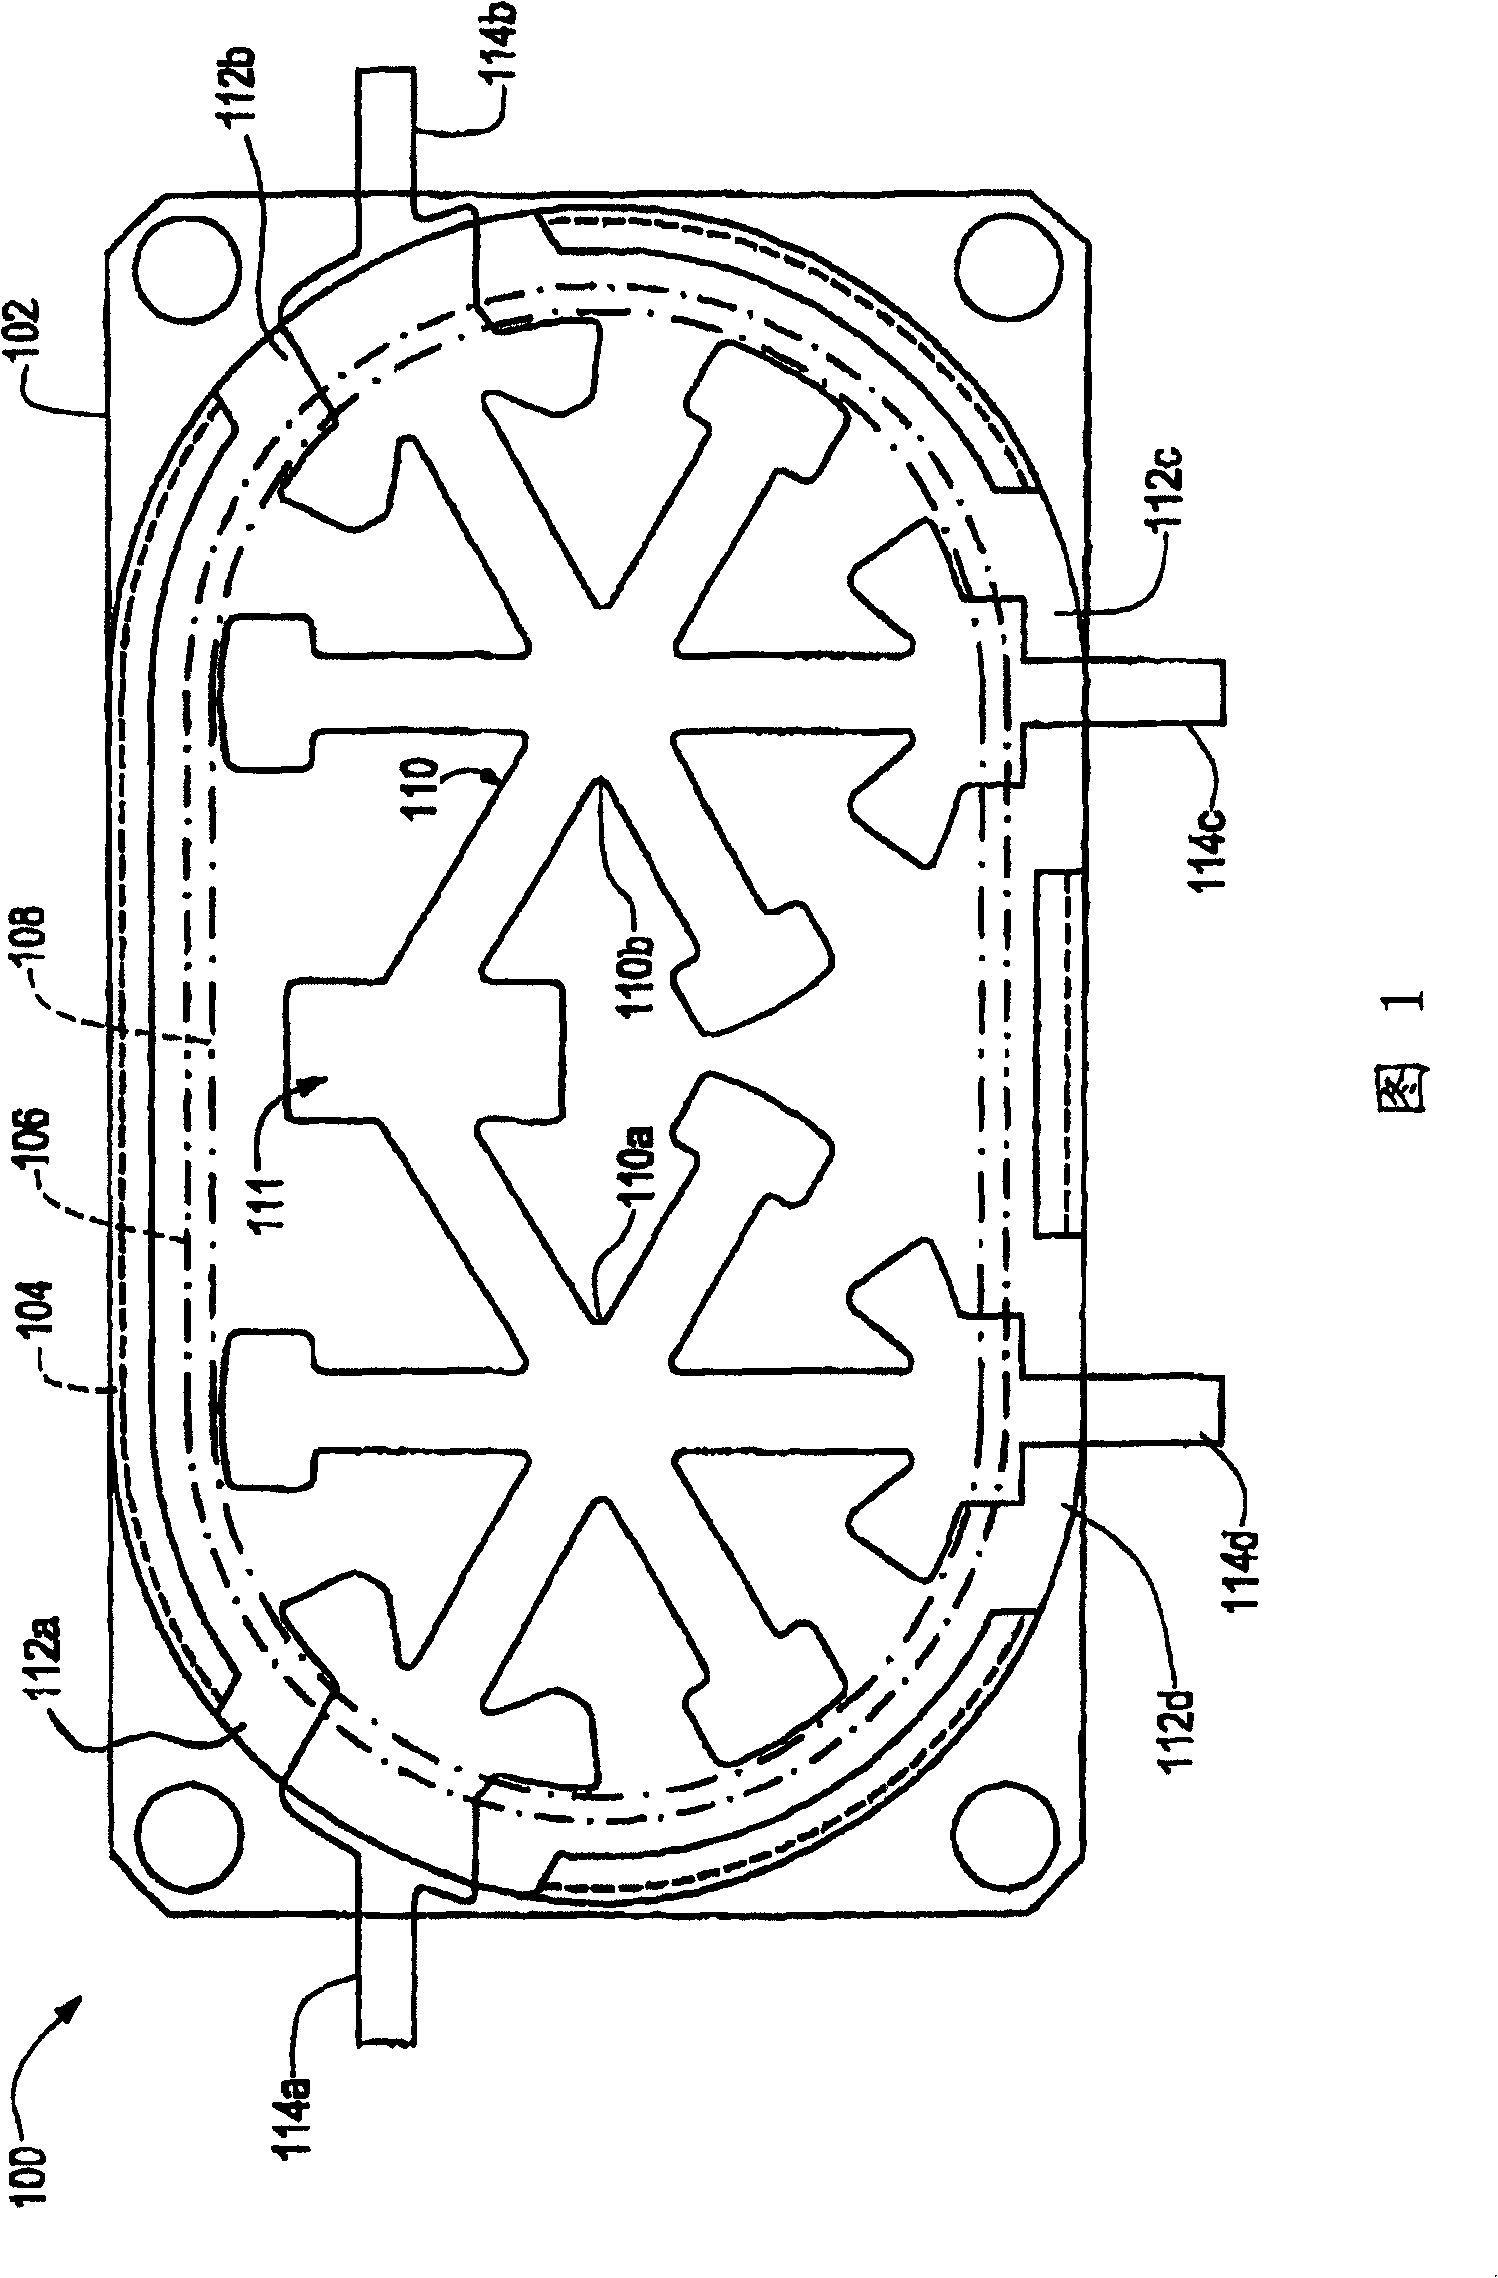 Compact multi-element cascade cyclic energy transferring device